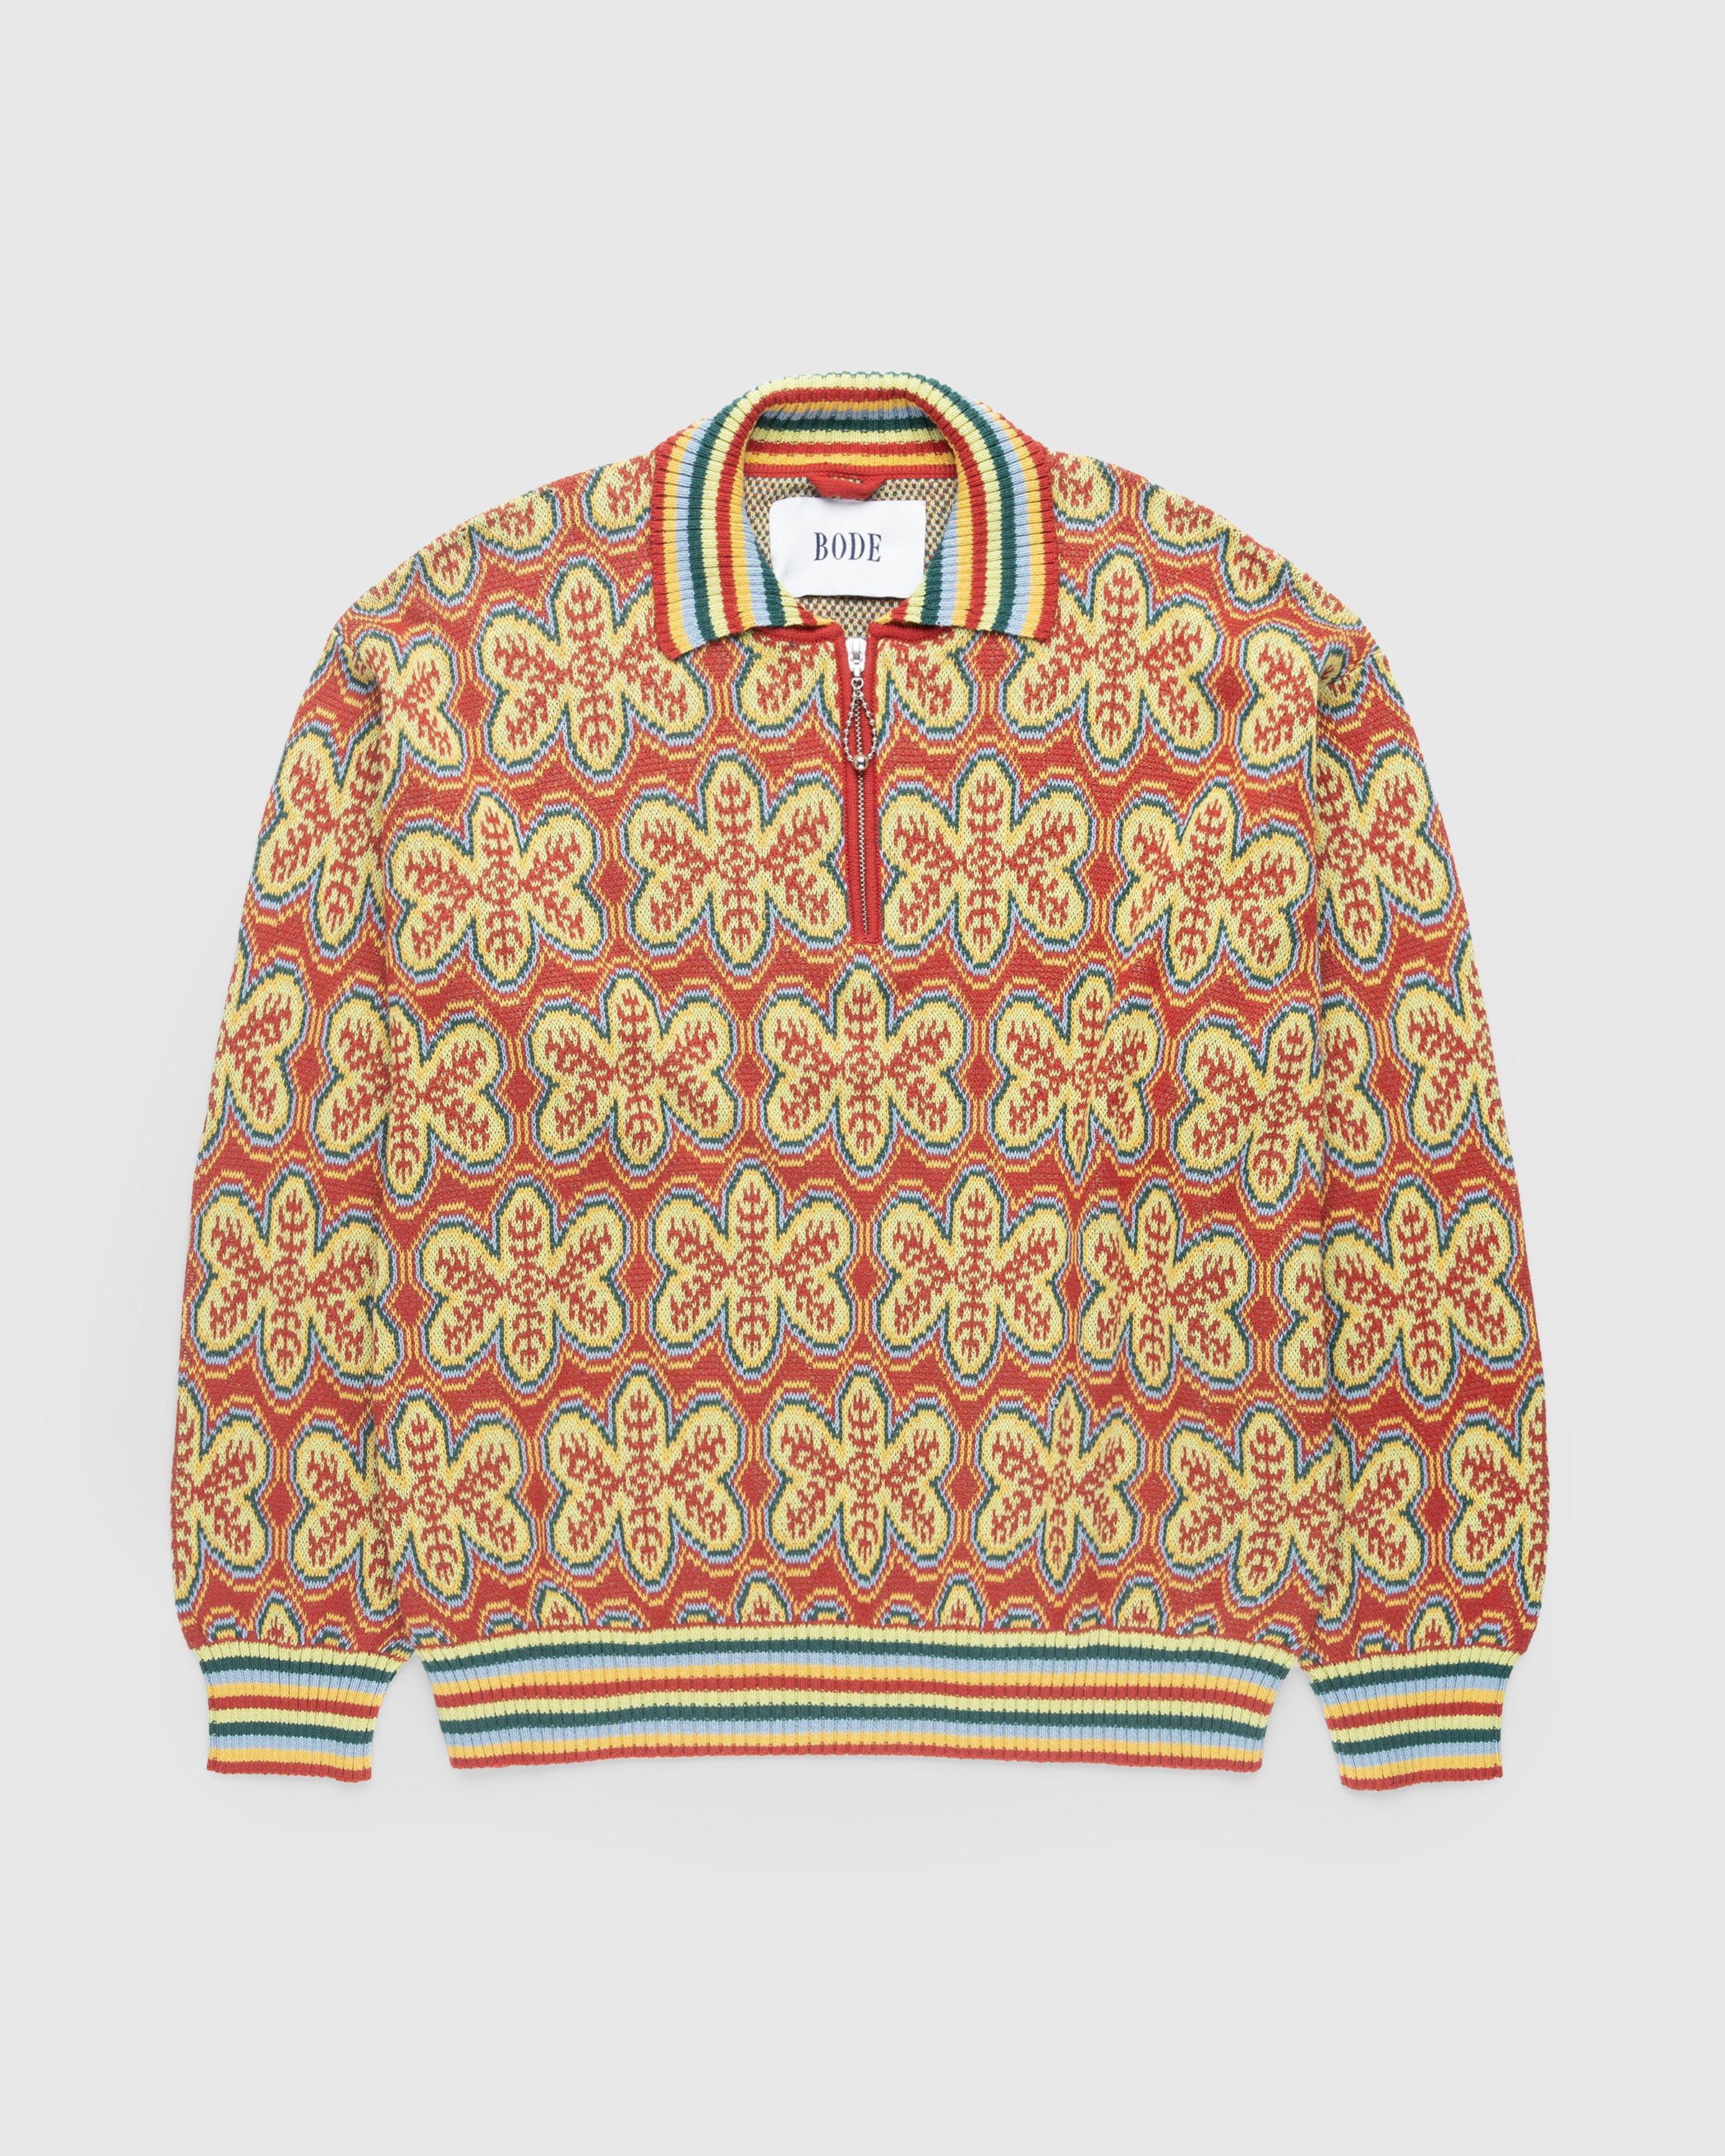 Bode - Dream State Quarter-Zip Sweater Multi - Clothing - Multi - Image 1